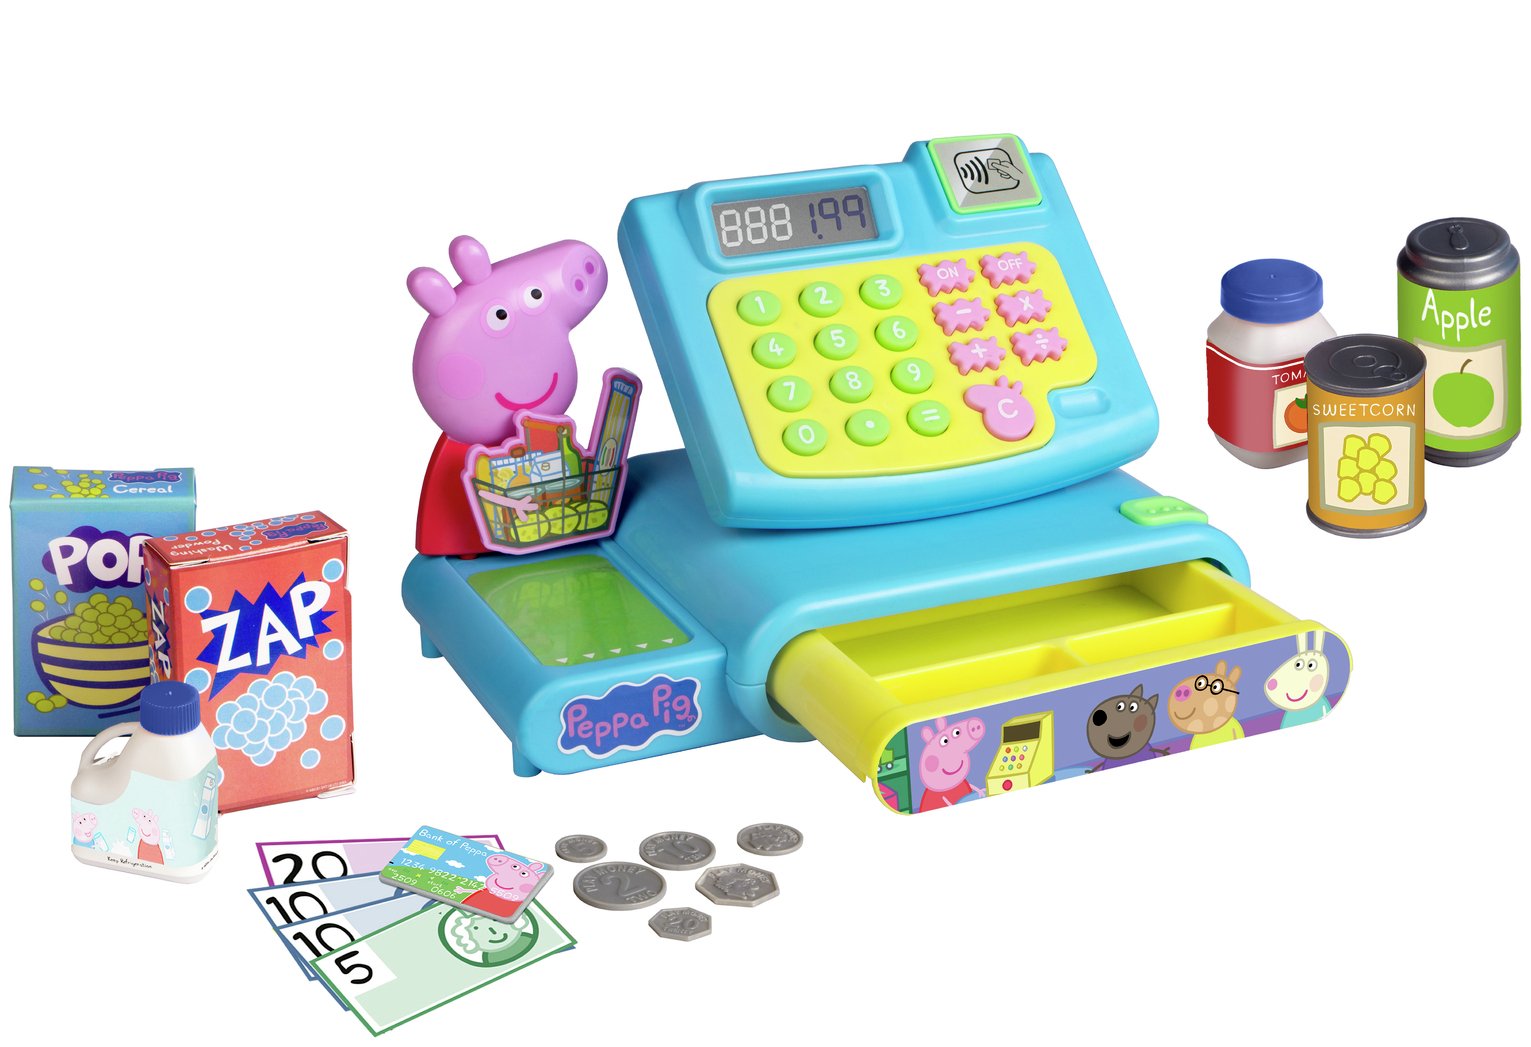 Peppa Pig Cash Register review